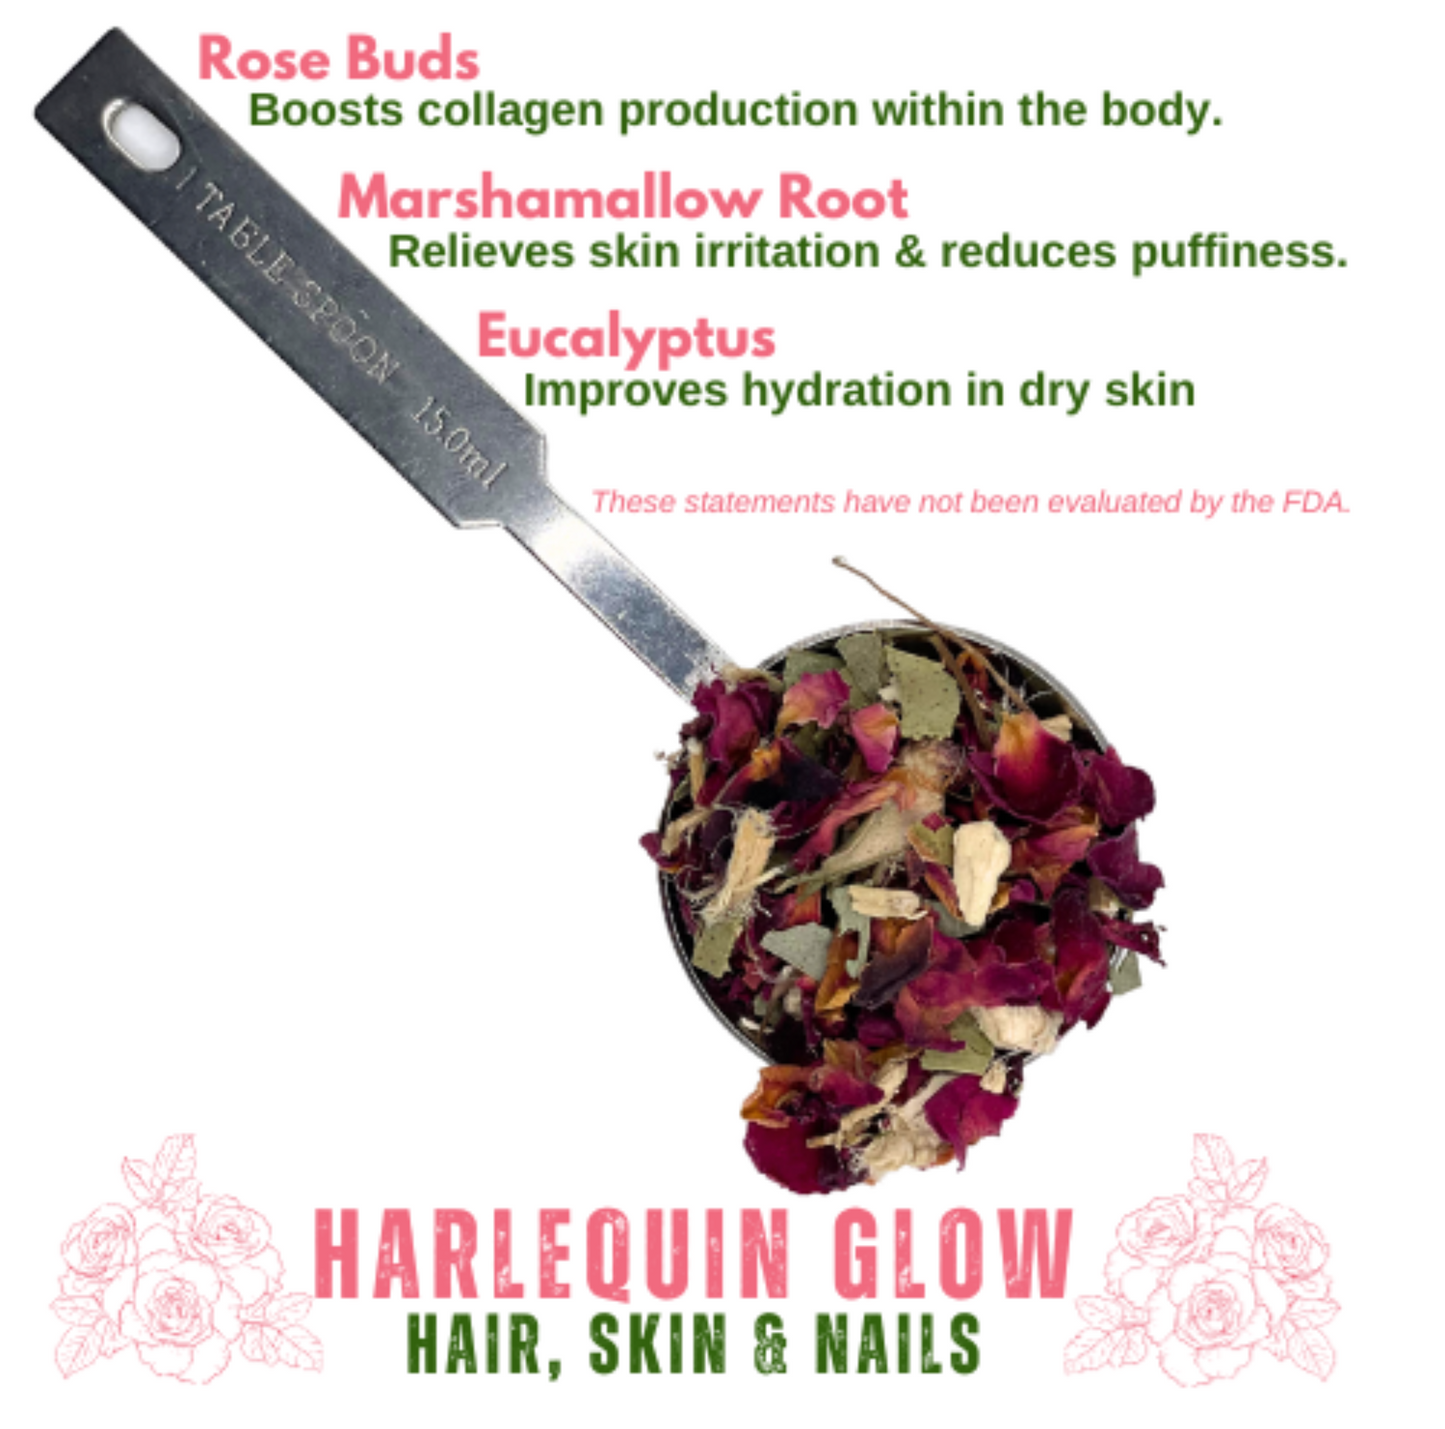 Harlequin Glow - Tea for Hair, Skin & Nails